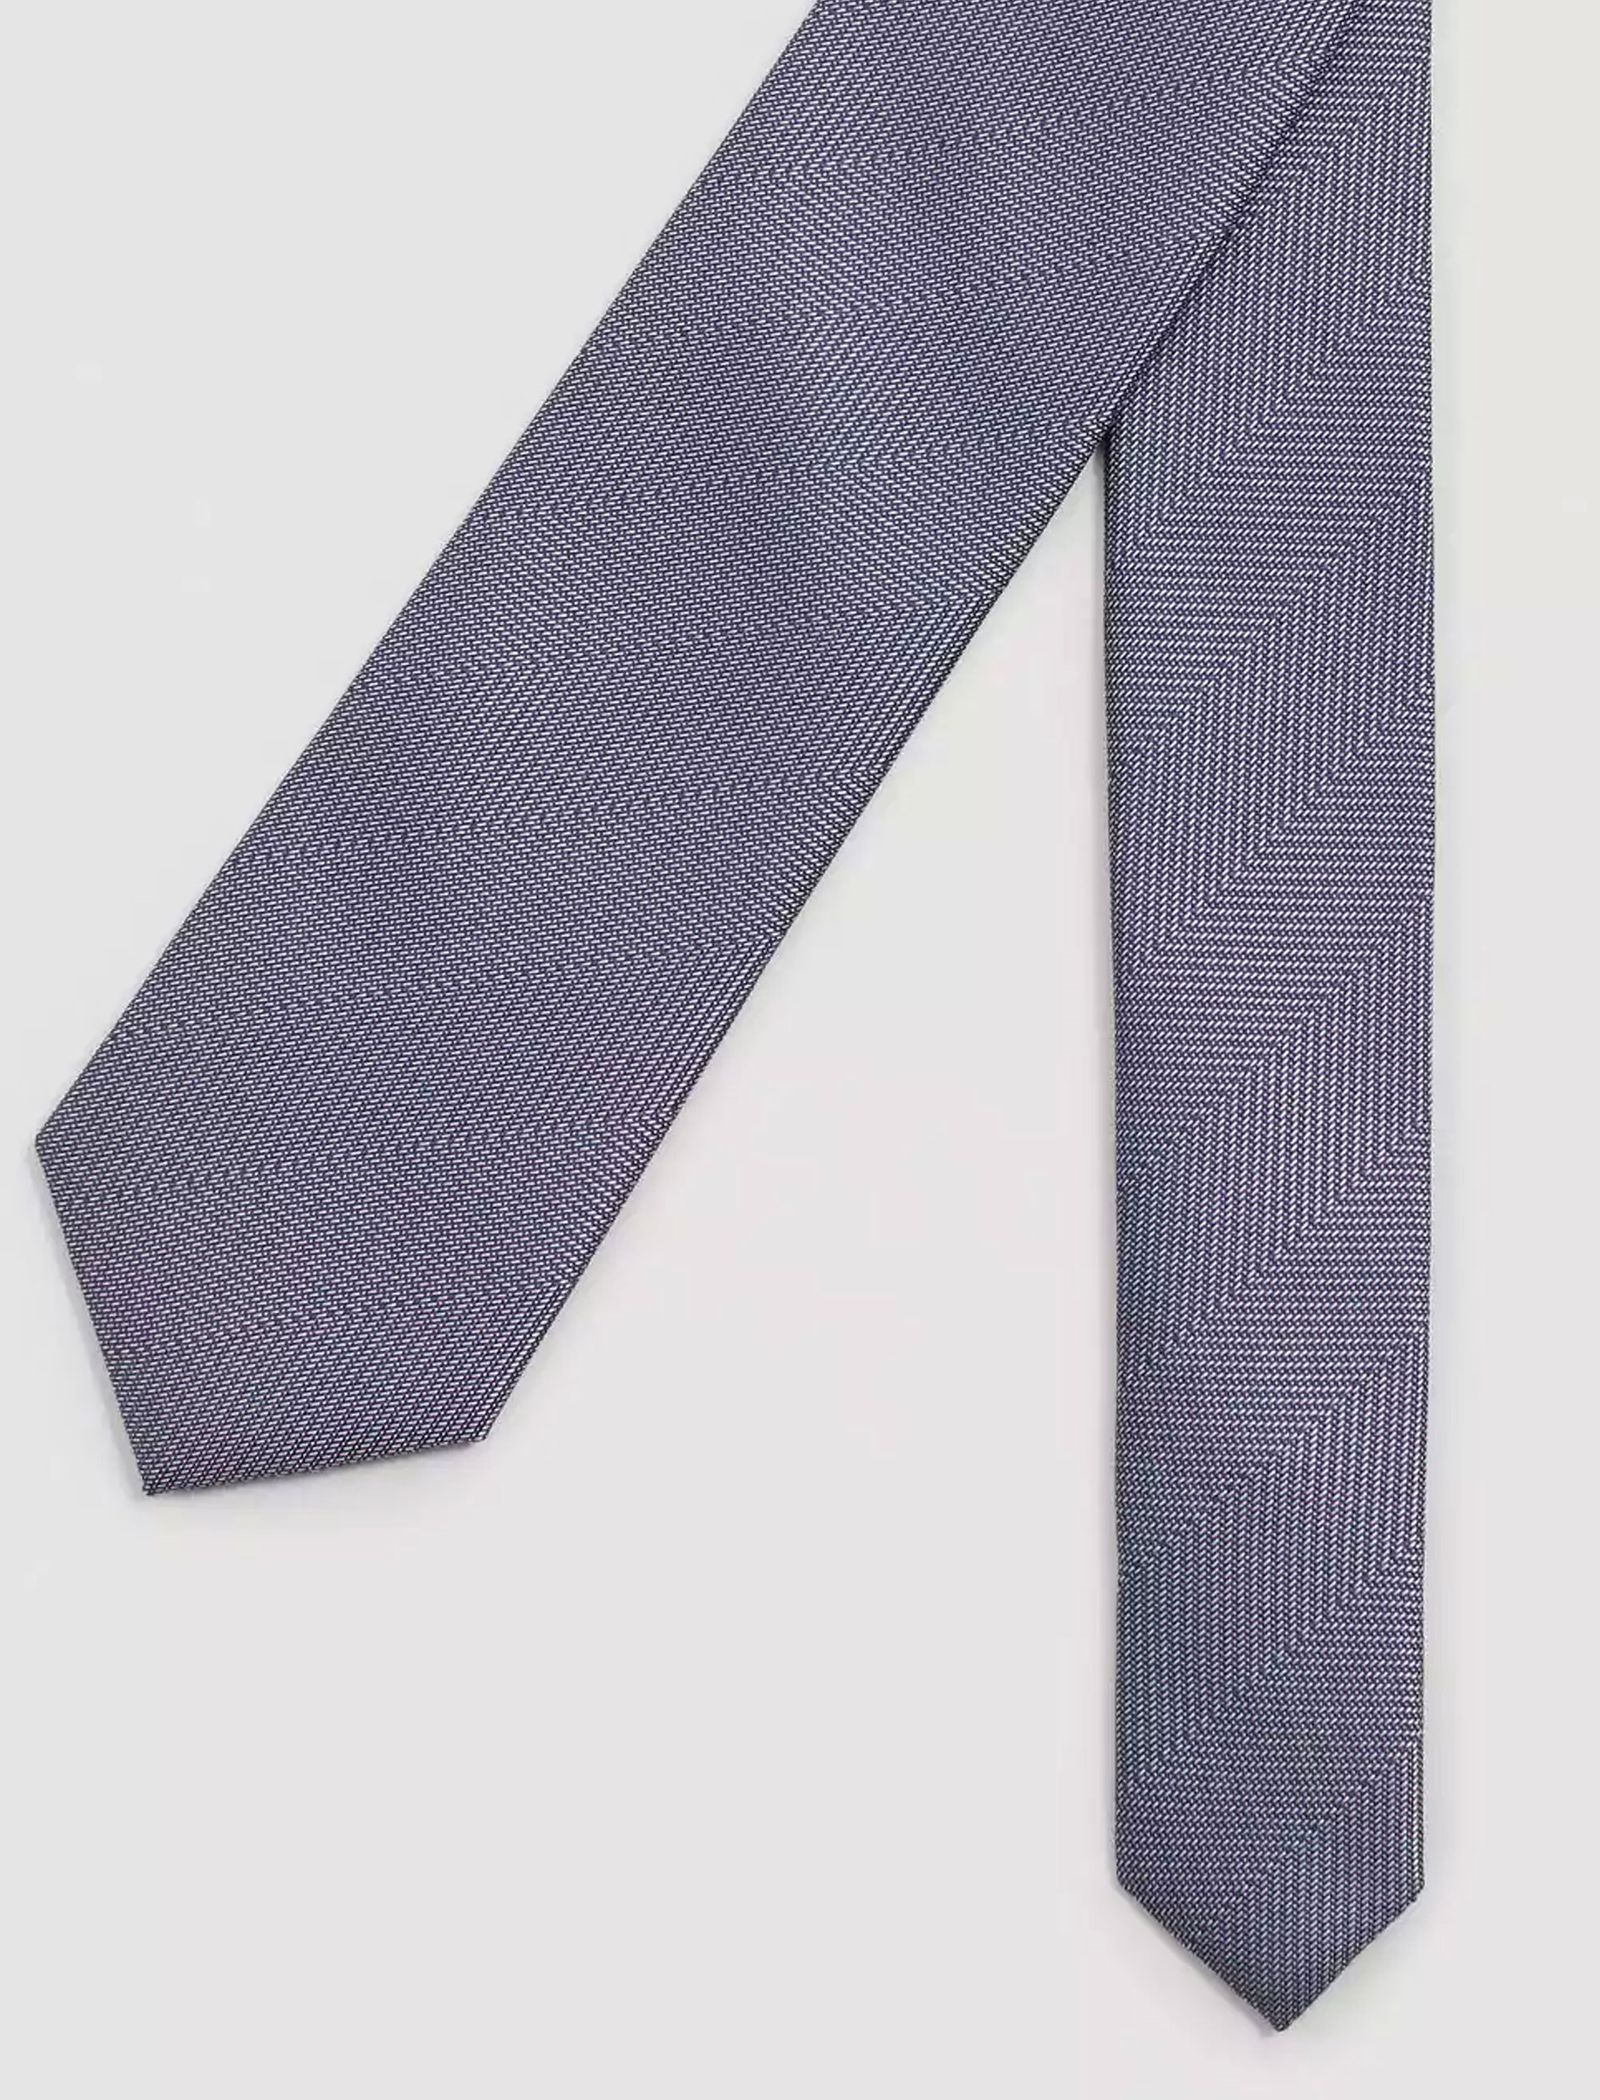 کراوات مانگو مدل 23020566 تک سایز - آبي - 4